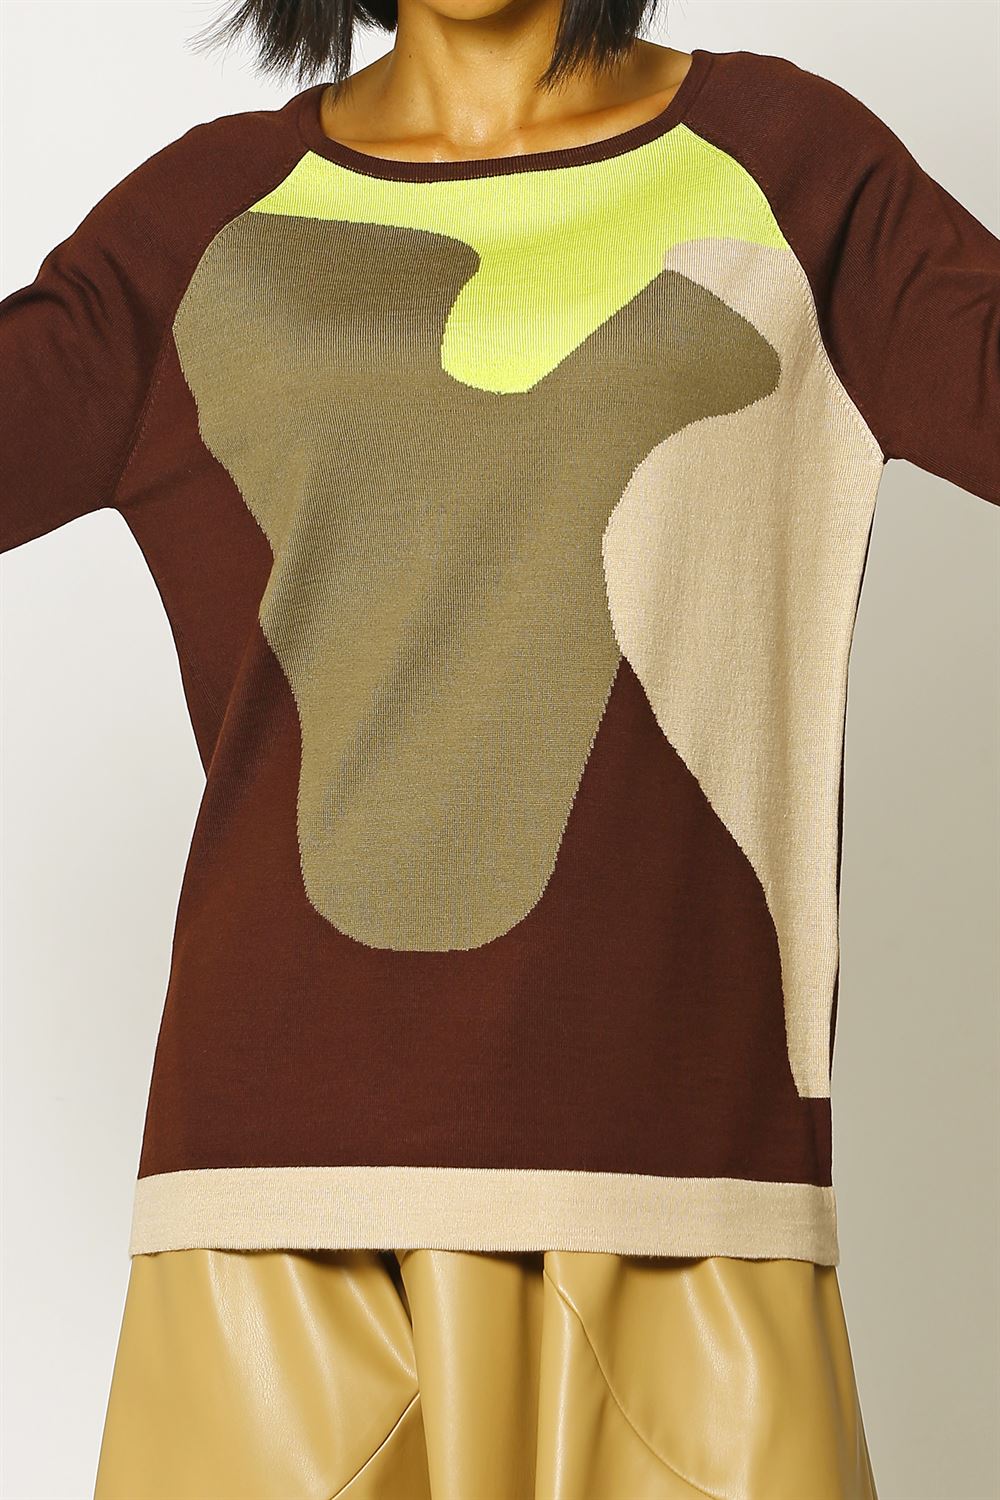 Intersia Sweater - Plum Green